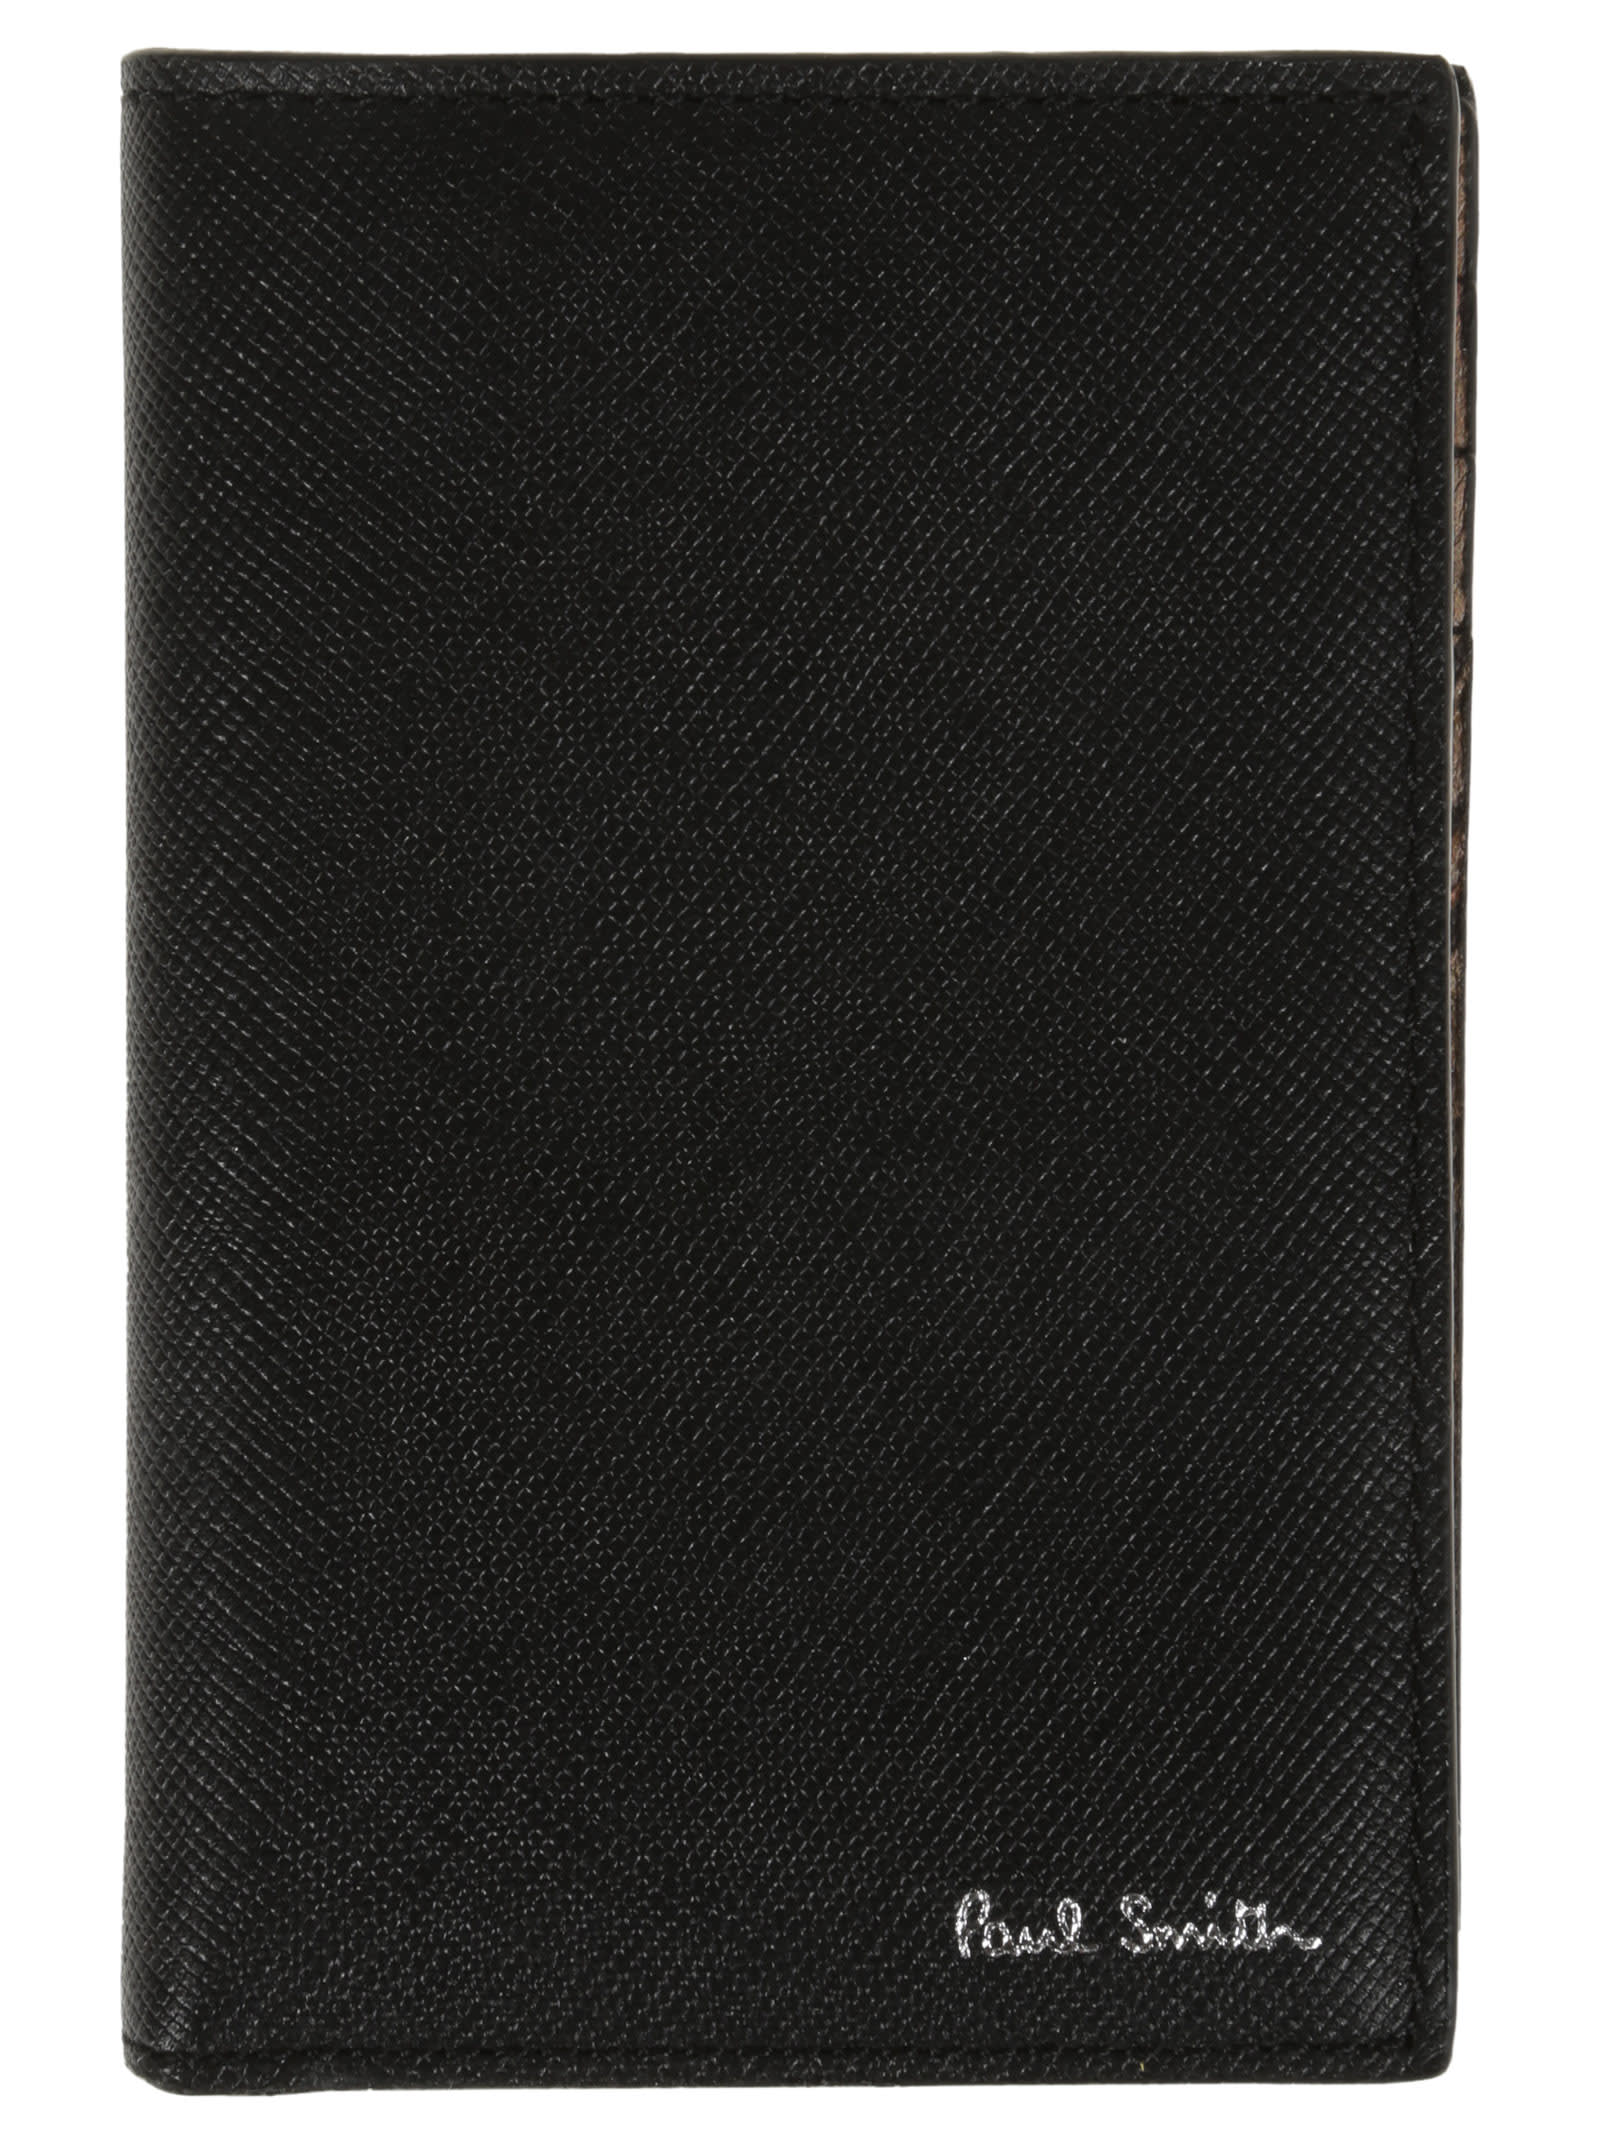 Paul Smith Wallet Cc Case Mini In Black